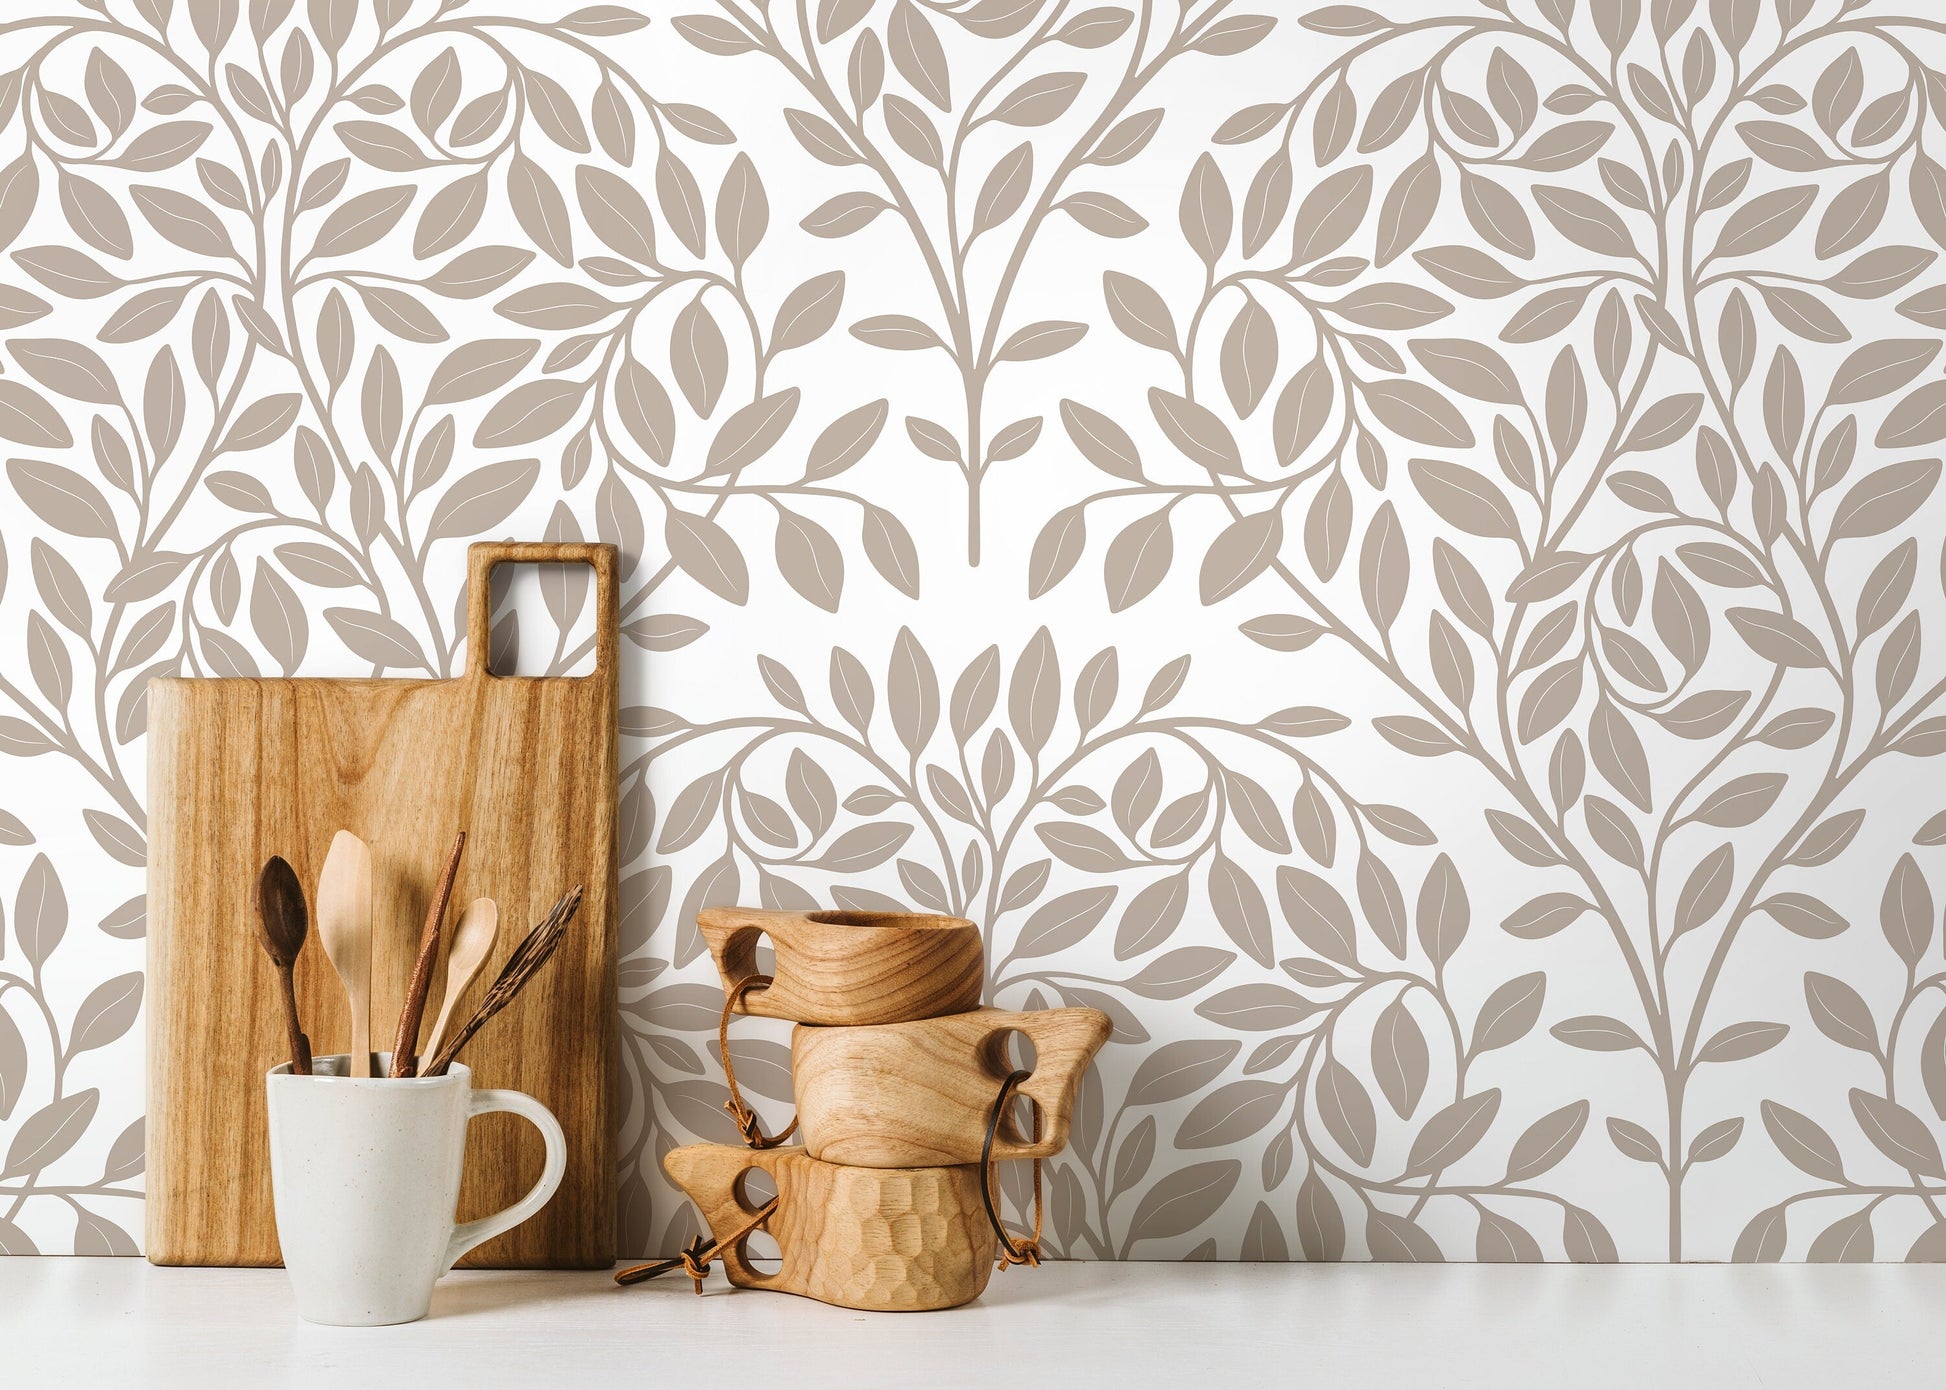 Minimalist Boho Leaf Wallpaper / Peel and Stick Wallpaper Removable Wallpaper Home Decor Wall Art Wall Decor Room Decor - D035